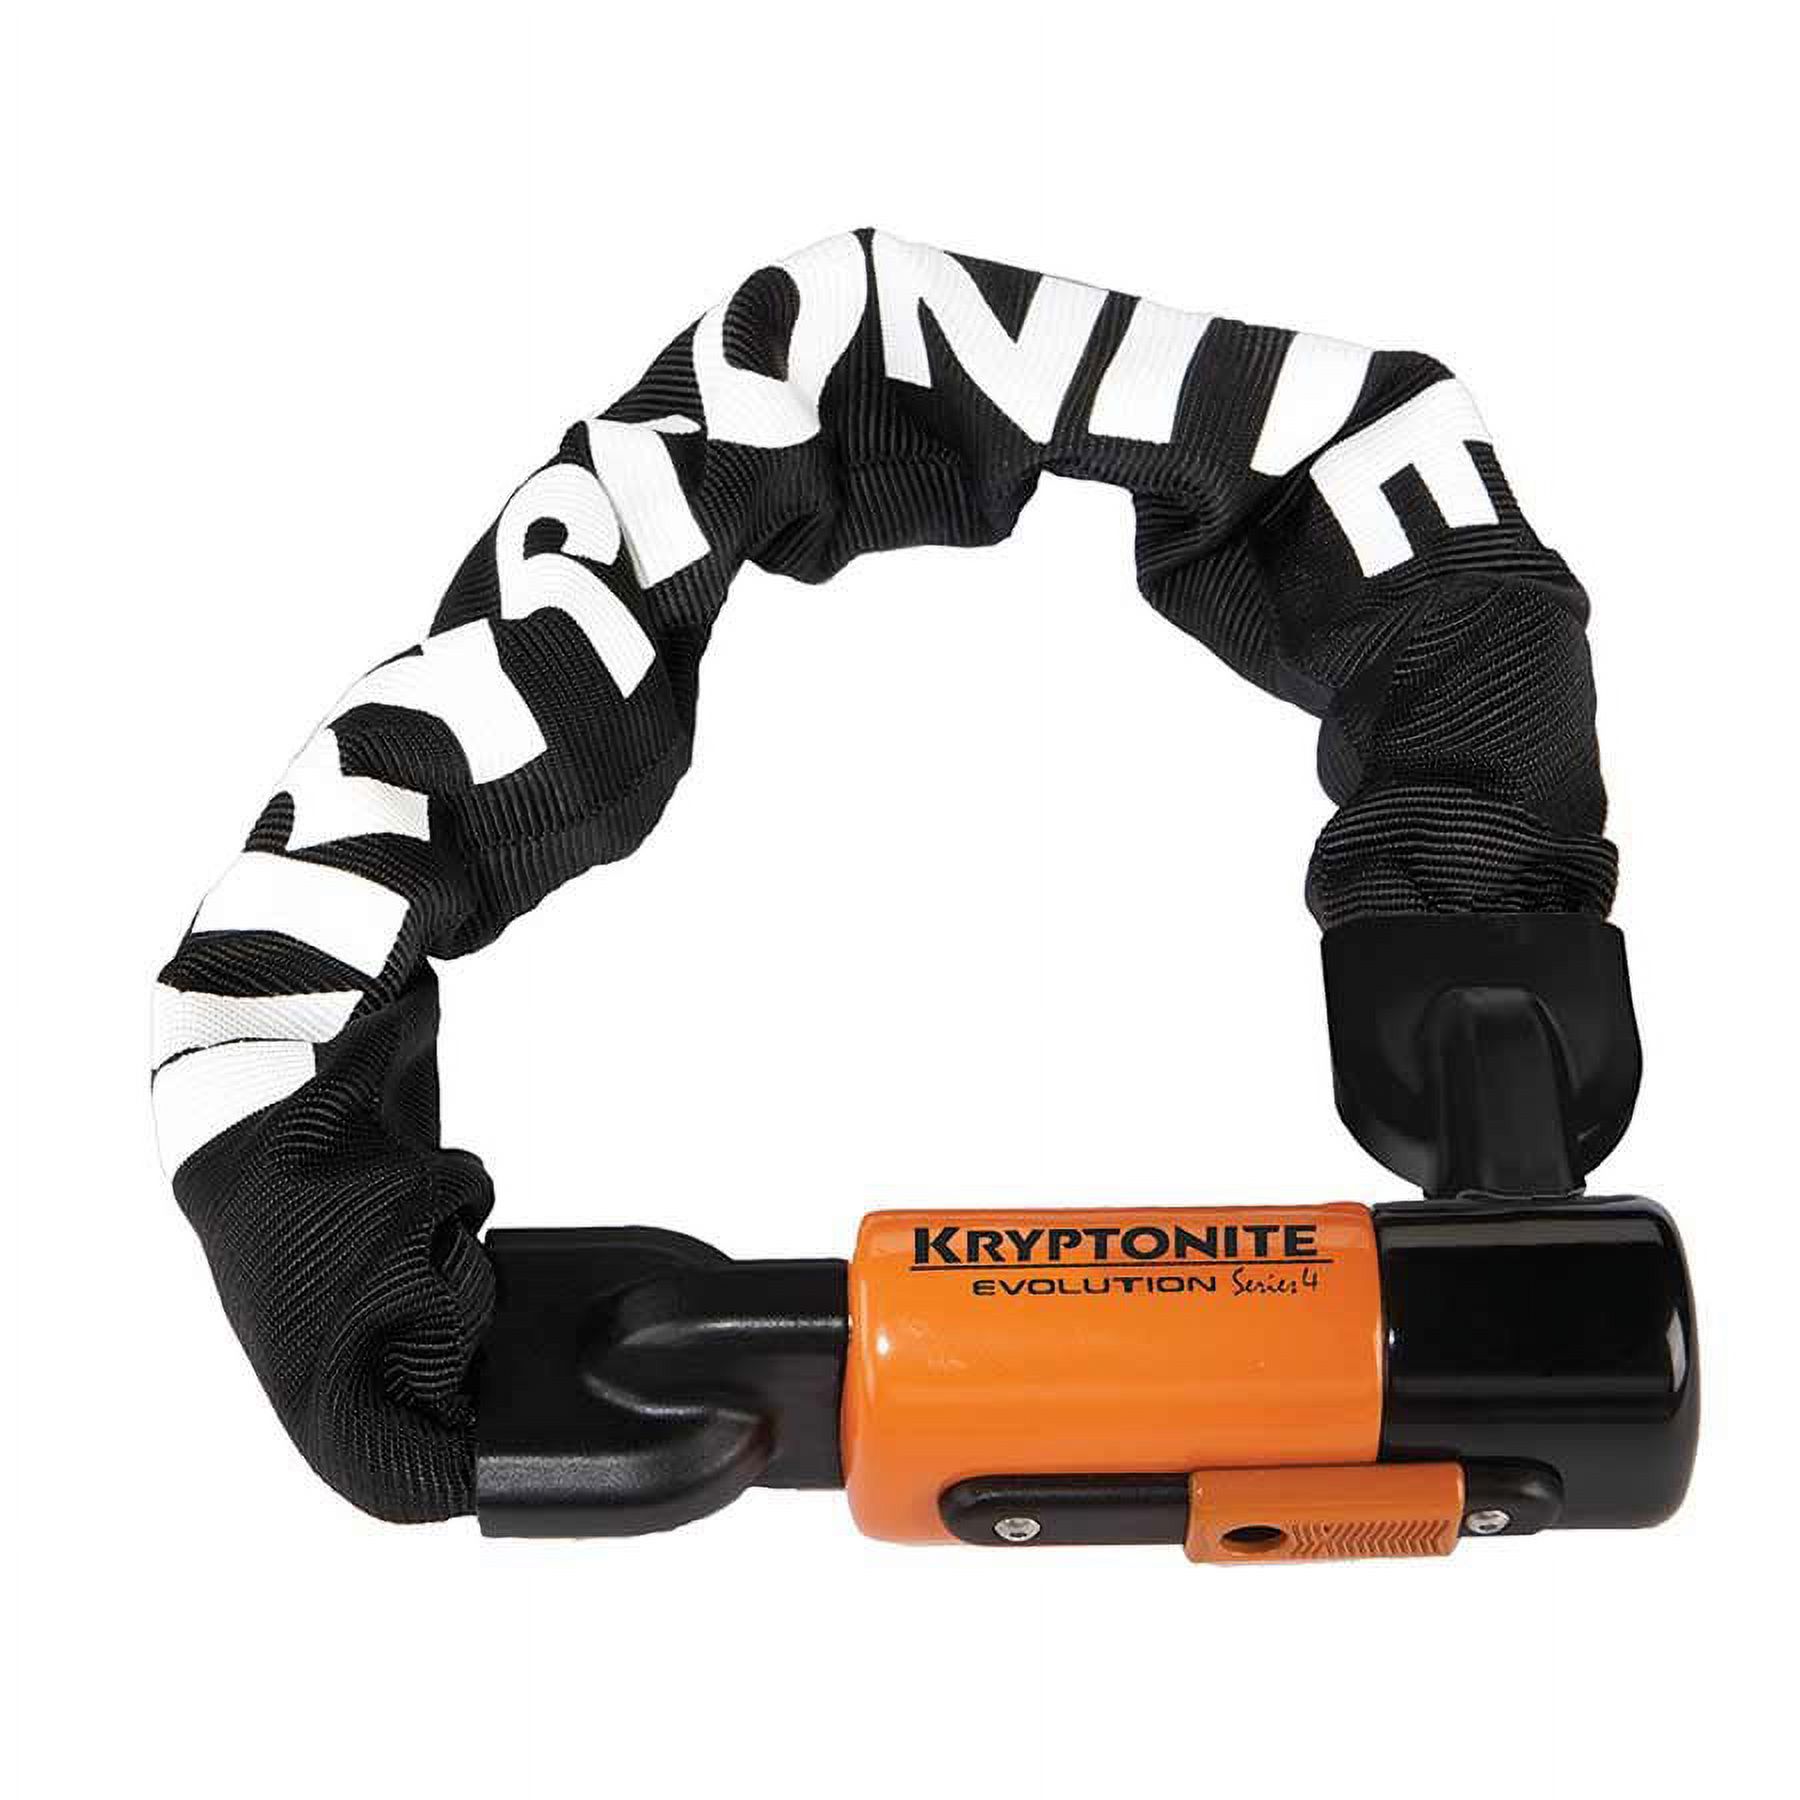 Kryptonite 1055 Evolution Mini Series 4 Chain Lock Keyed 10mm x 55cm End Link - image 2 of 2